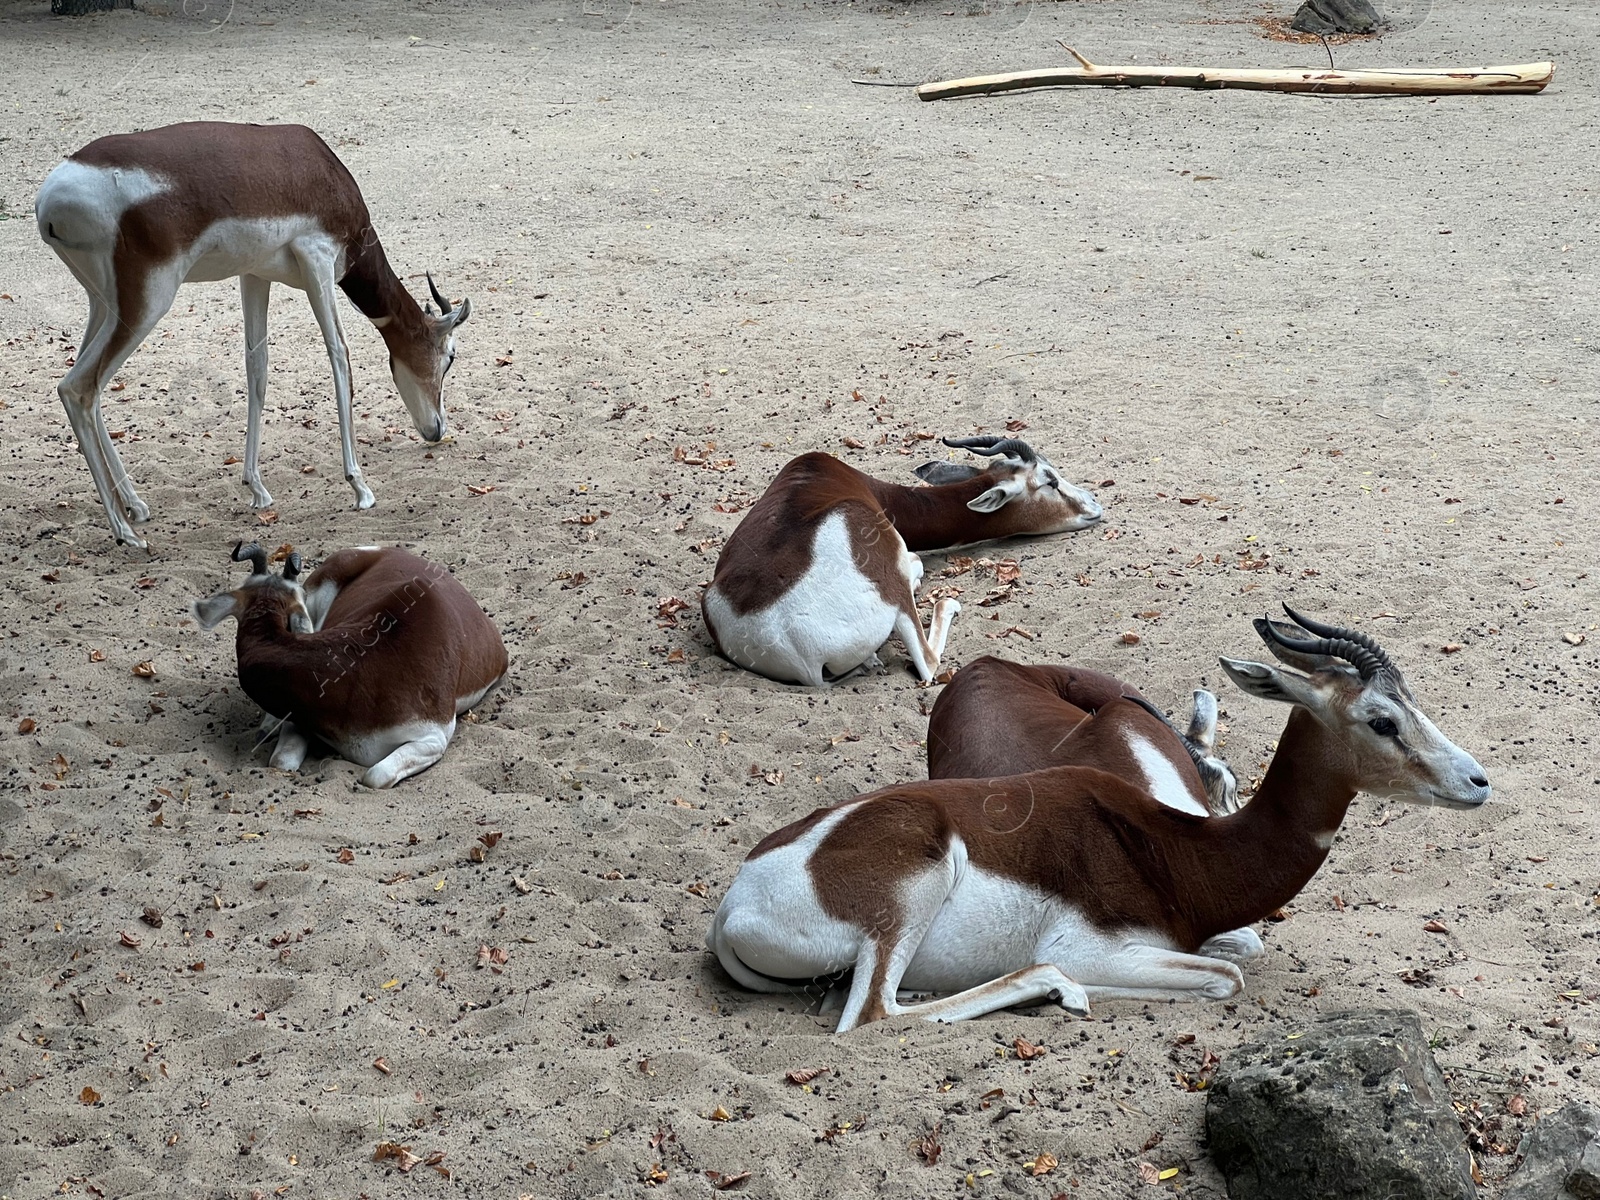 Photo of Group of beautiful Dama gazelles in zoo enclosure